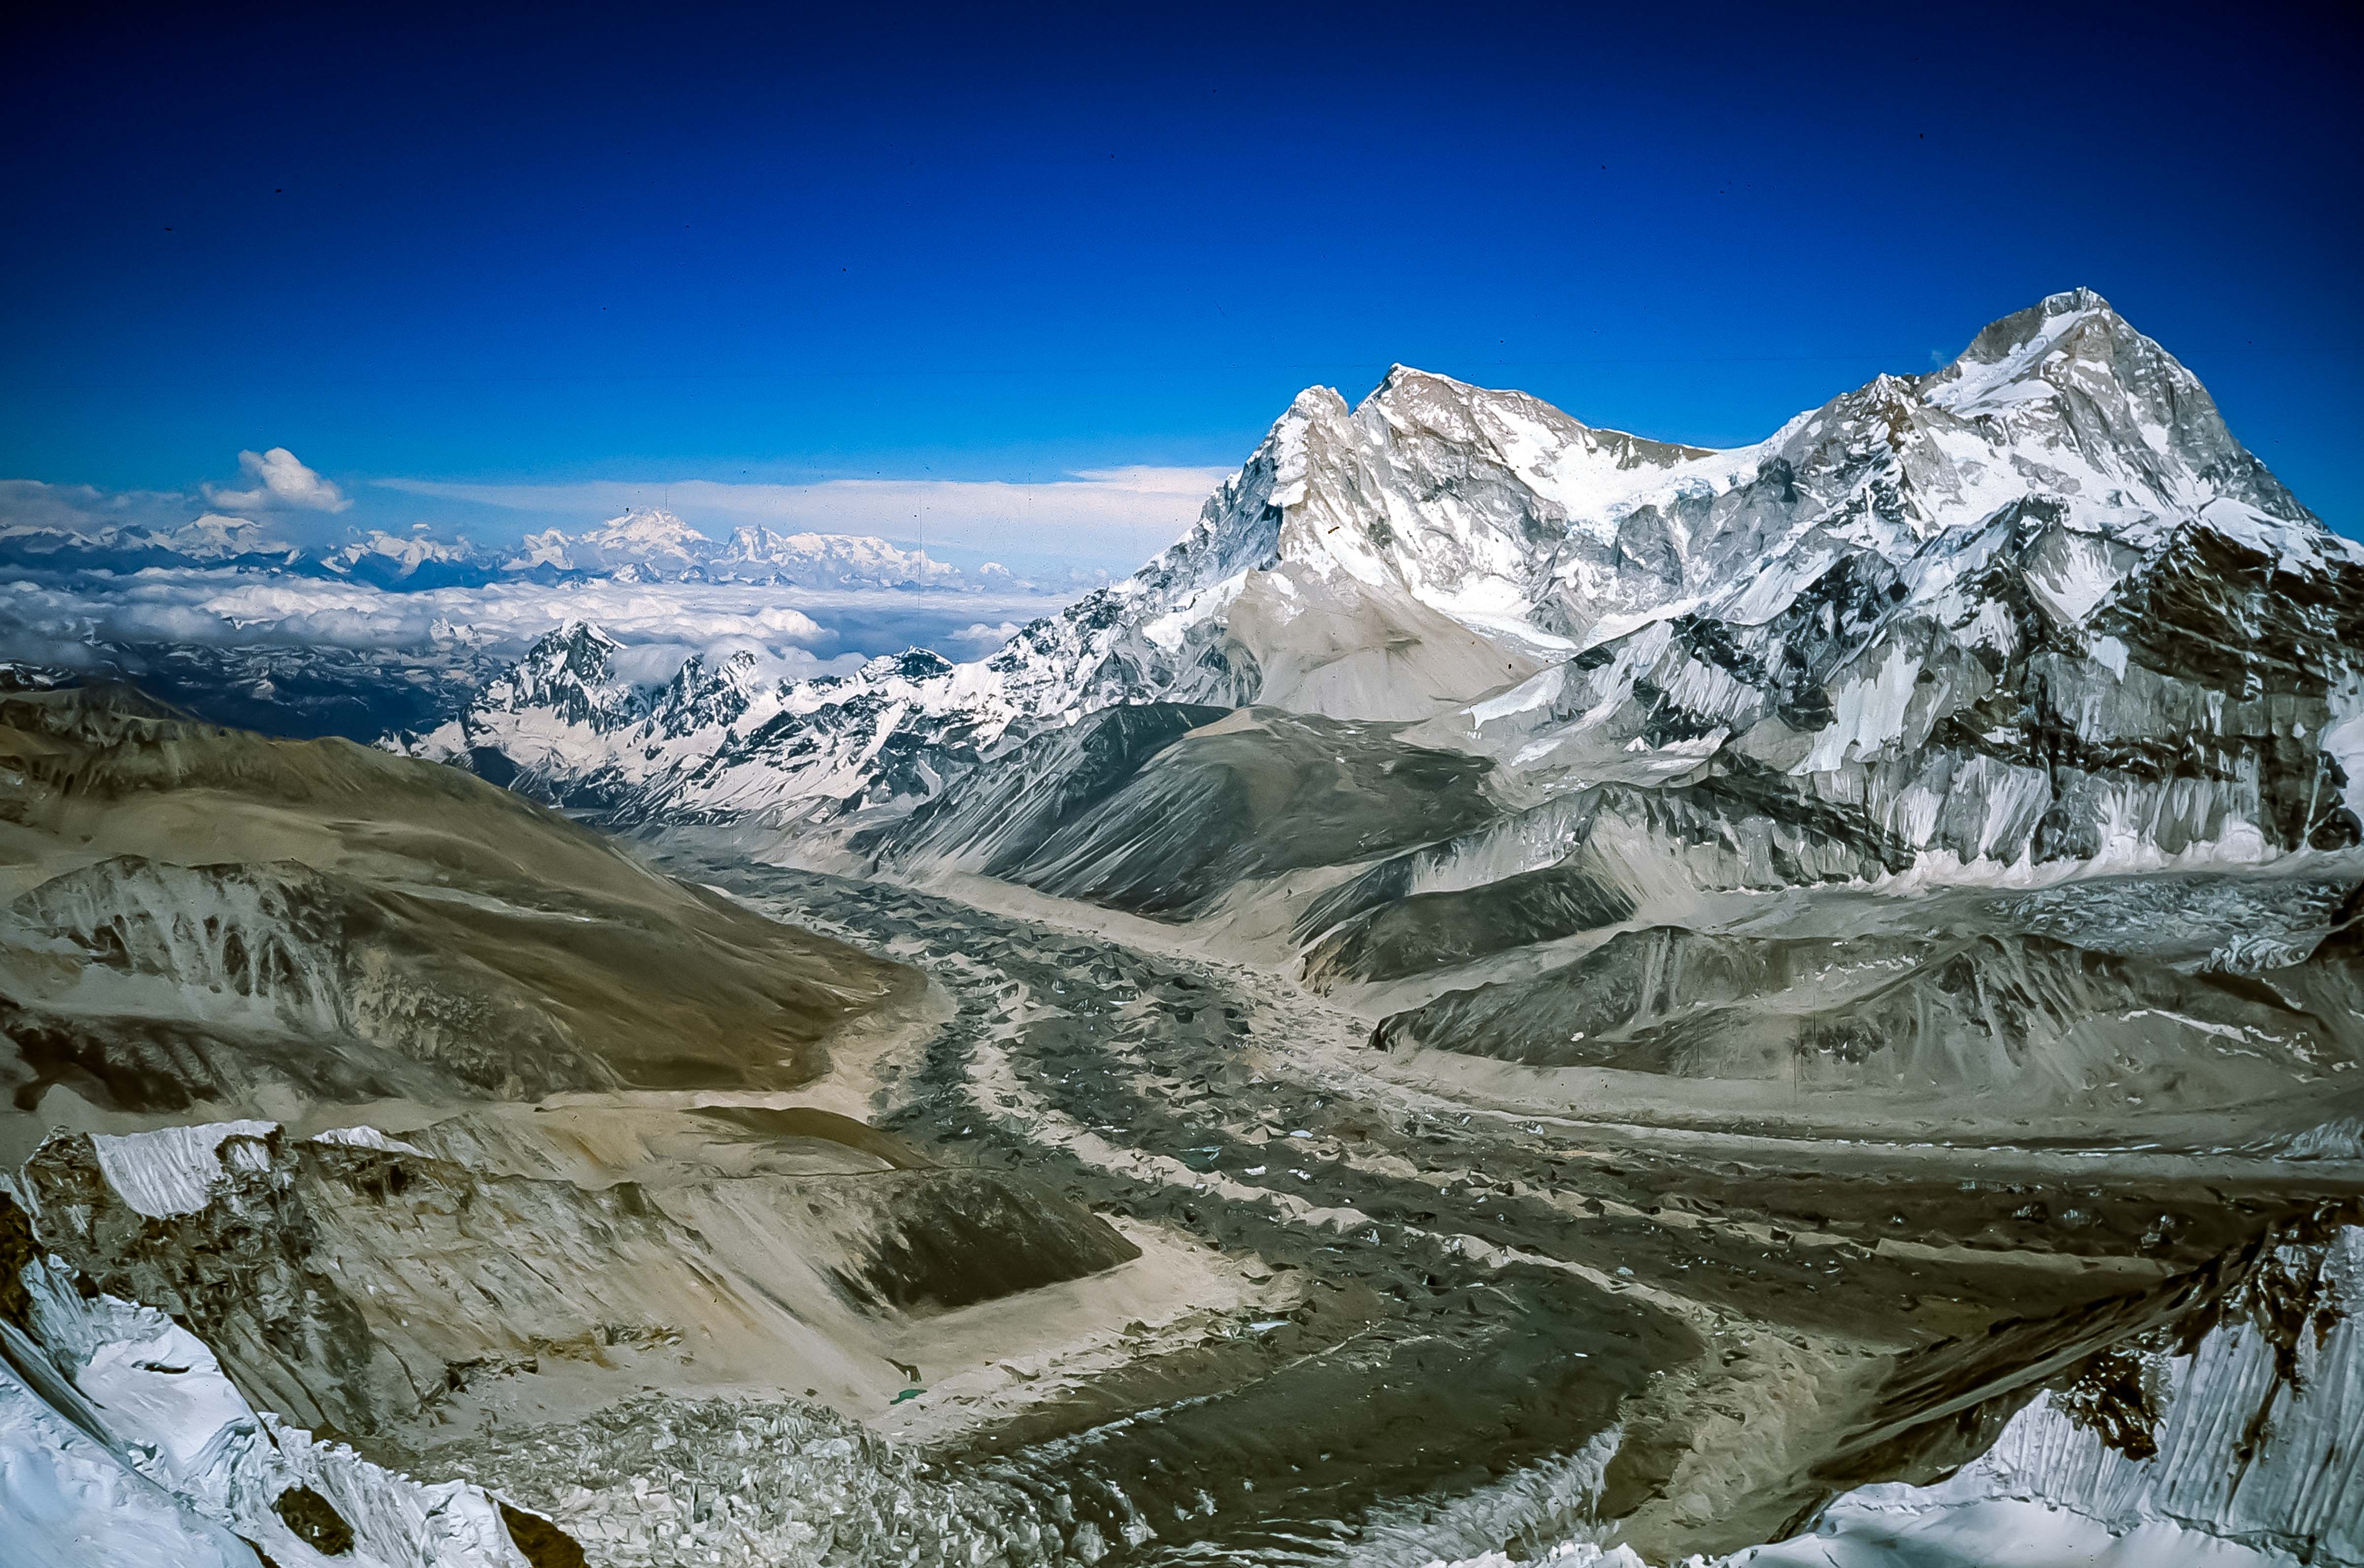 Tibet, Everest, Rabu La, Looking To Kanchenjunga, 1995